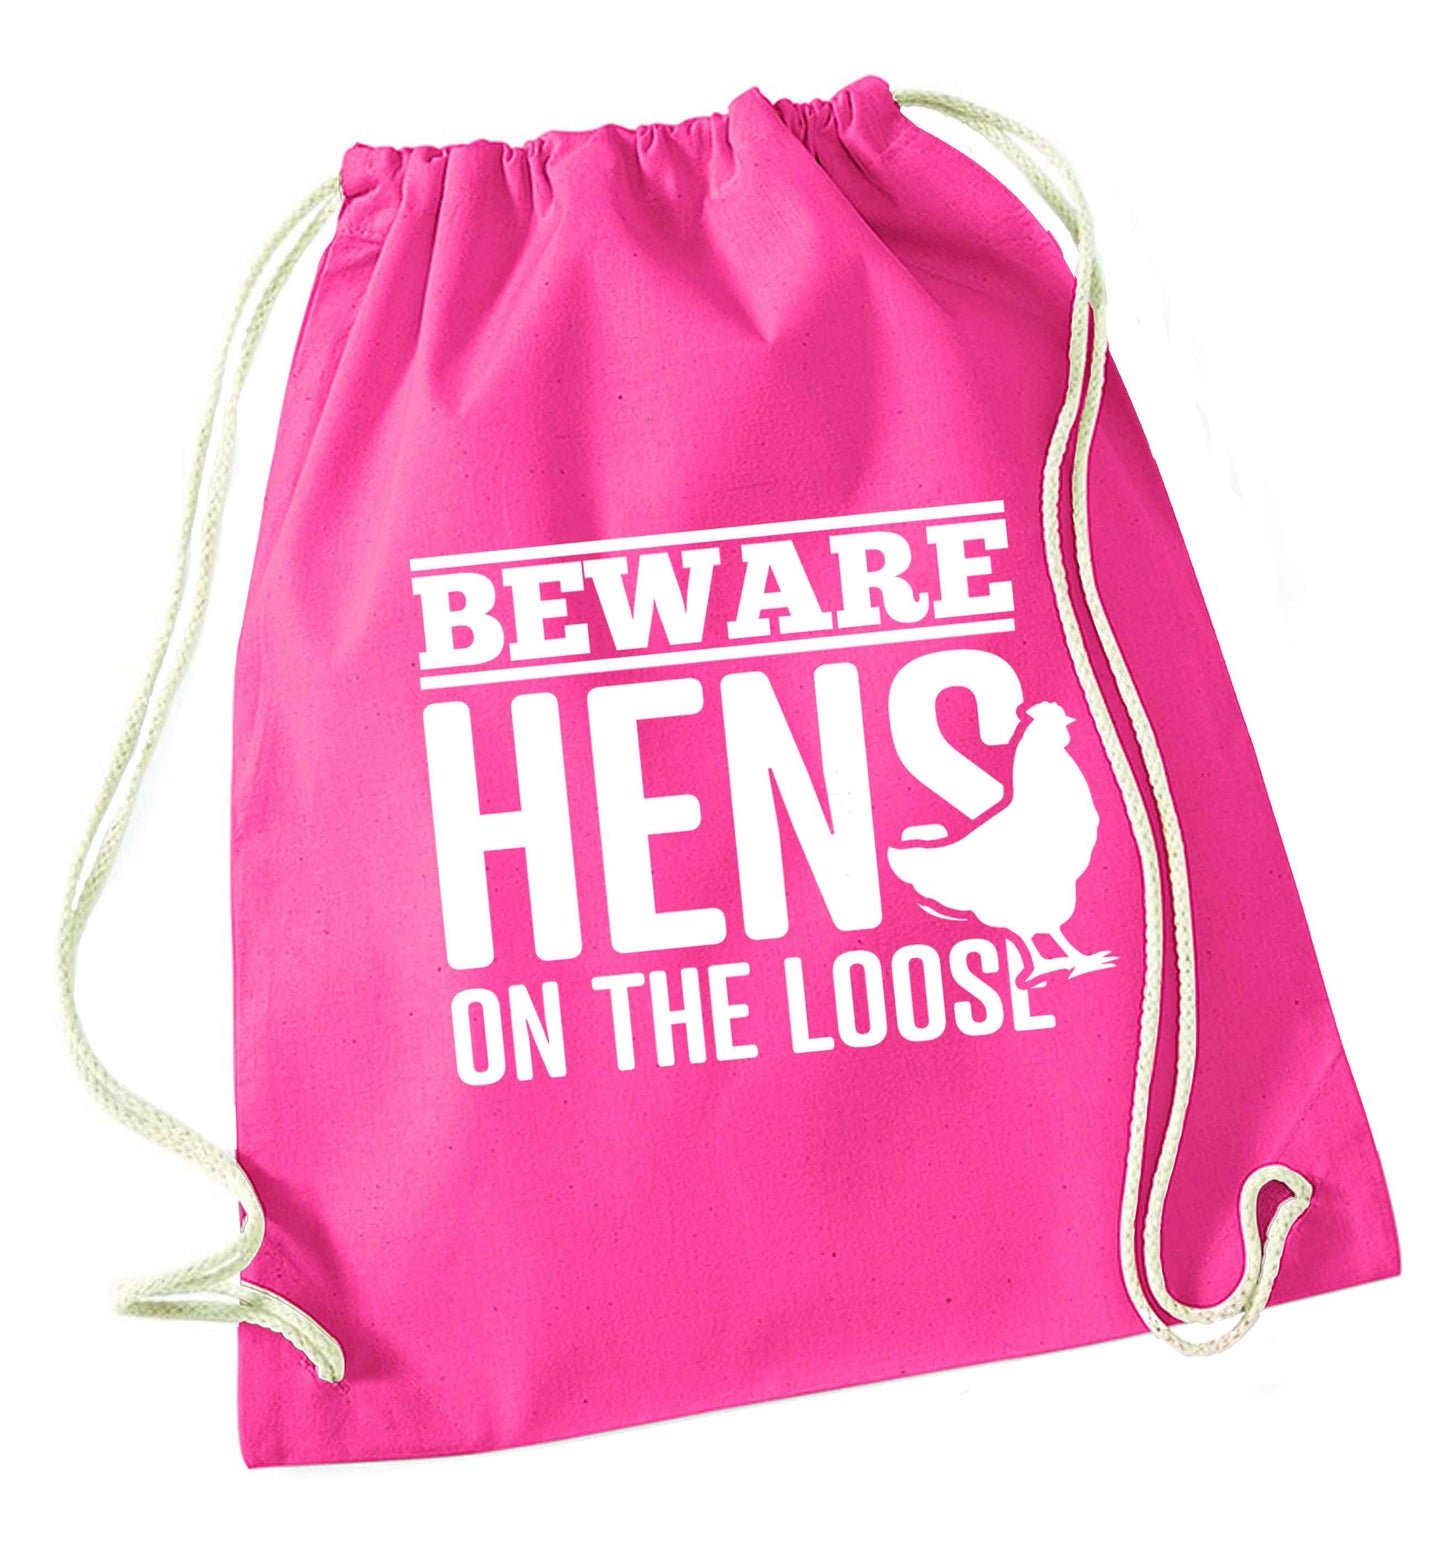 Beware hens on the loose pink drawstring bag